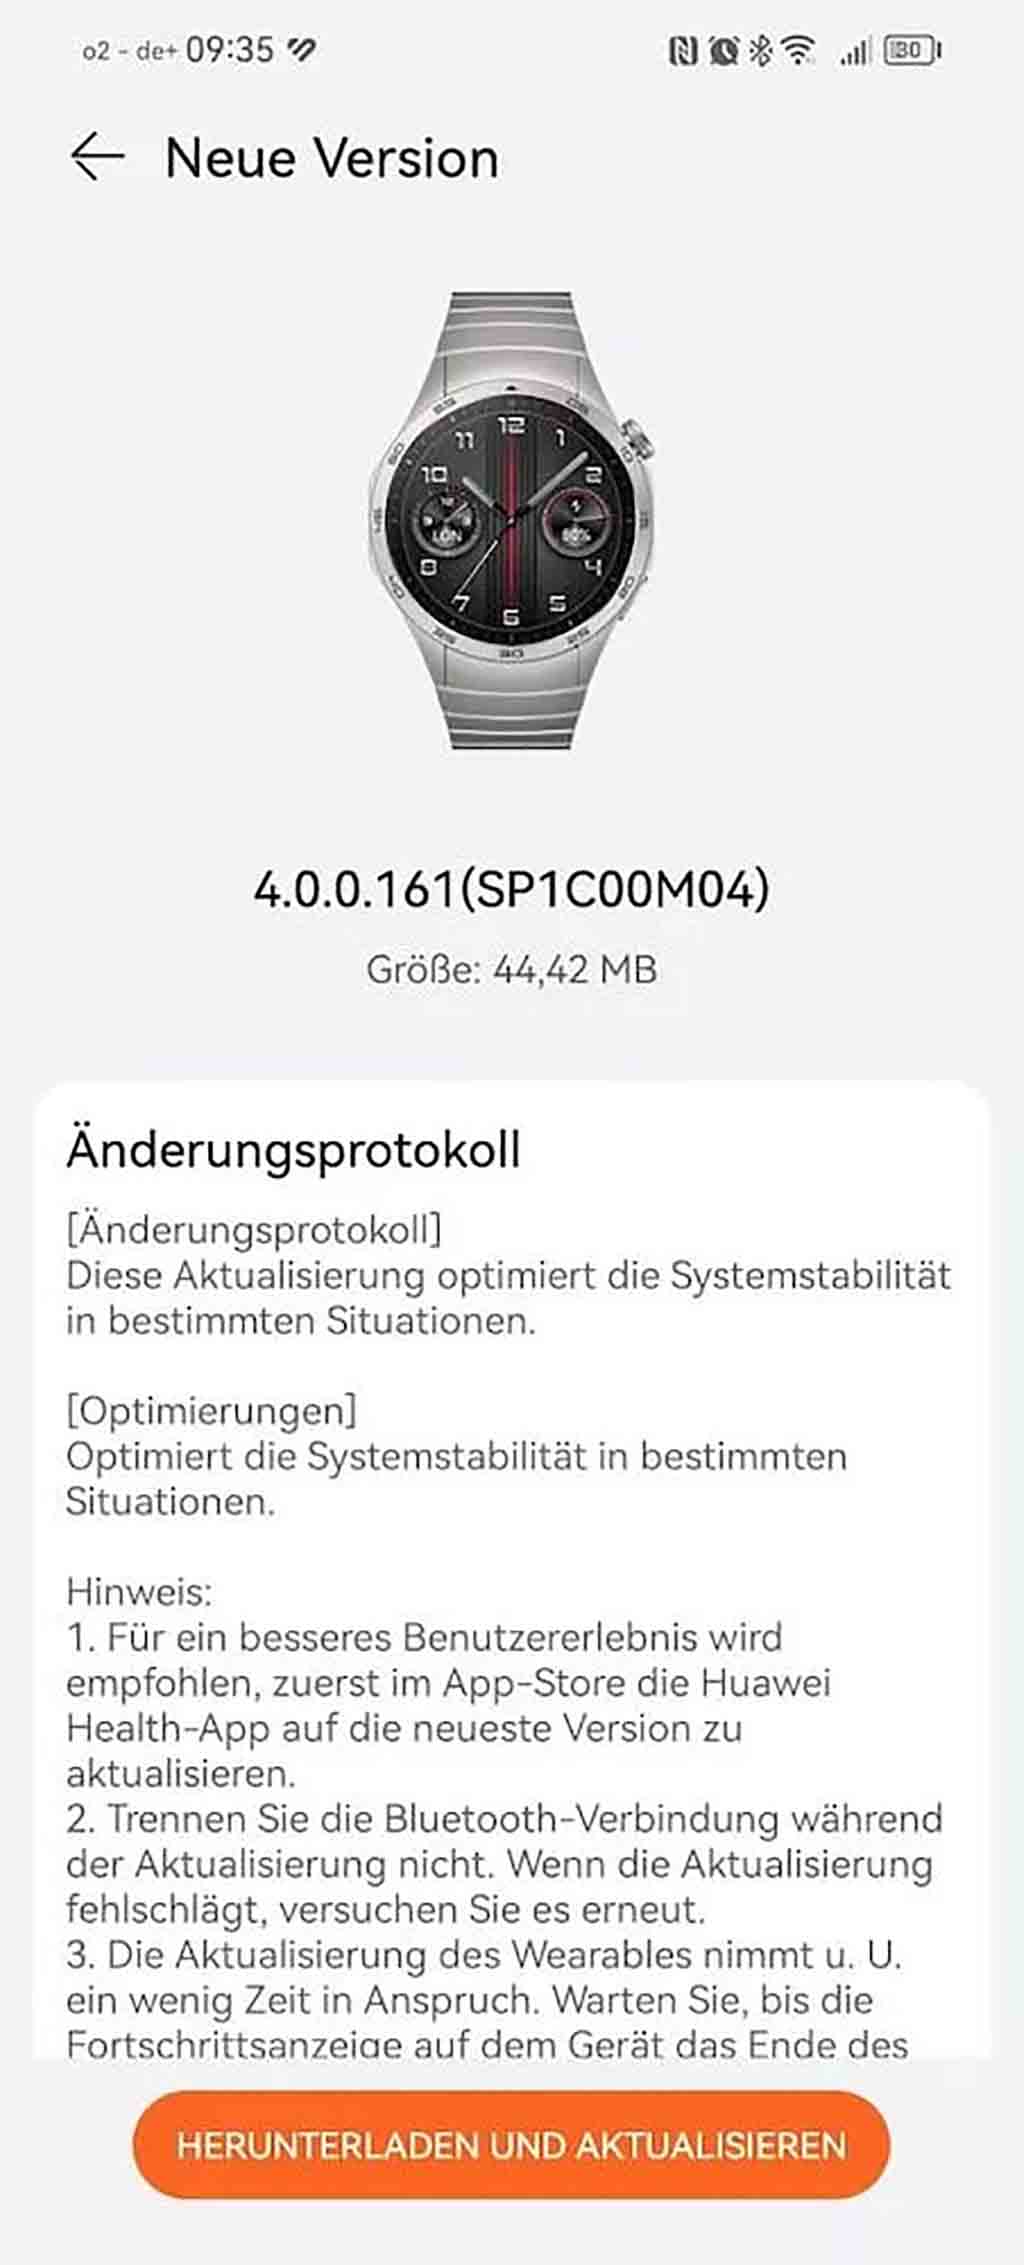 Huawei Watch GT 4 system improvements update